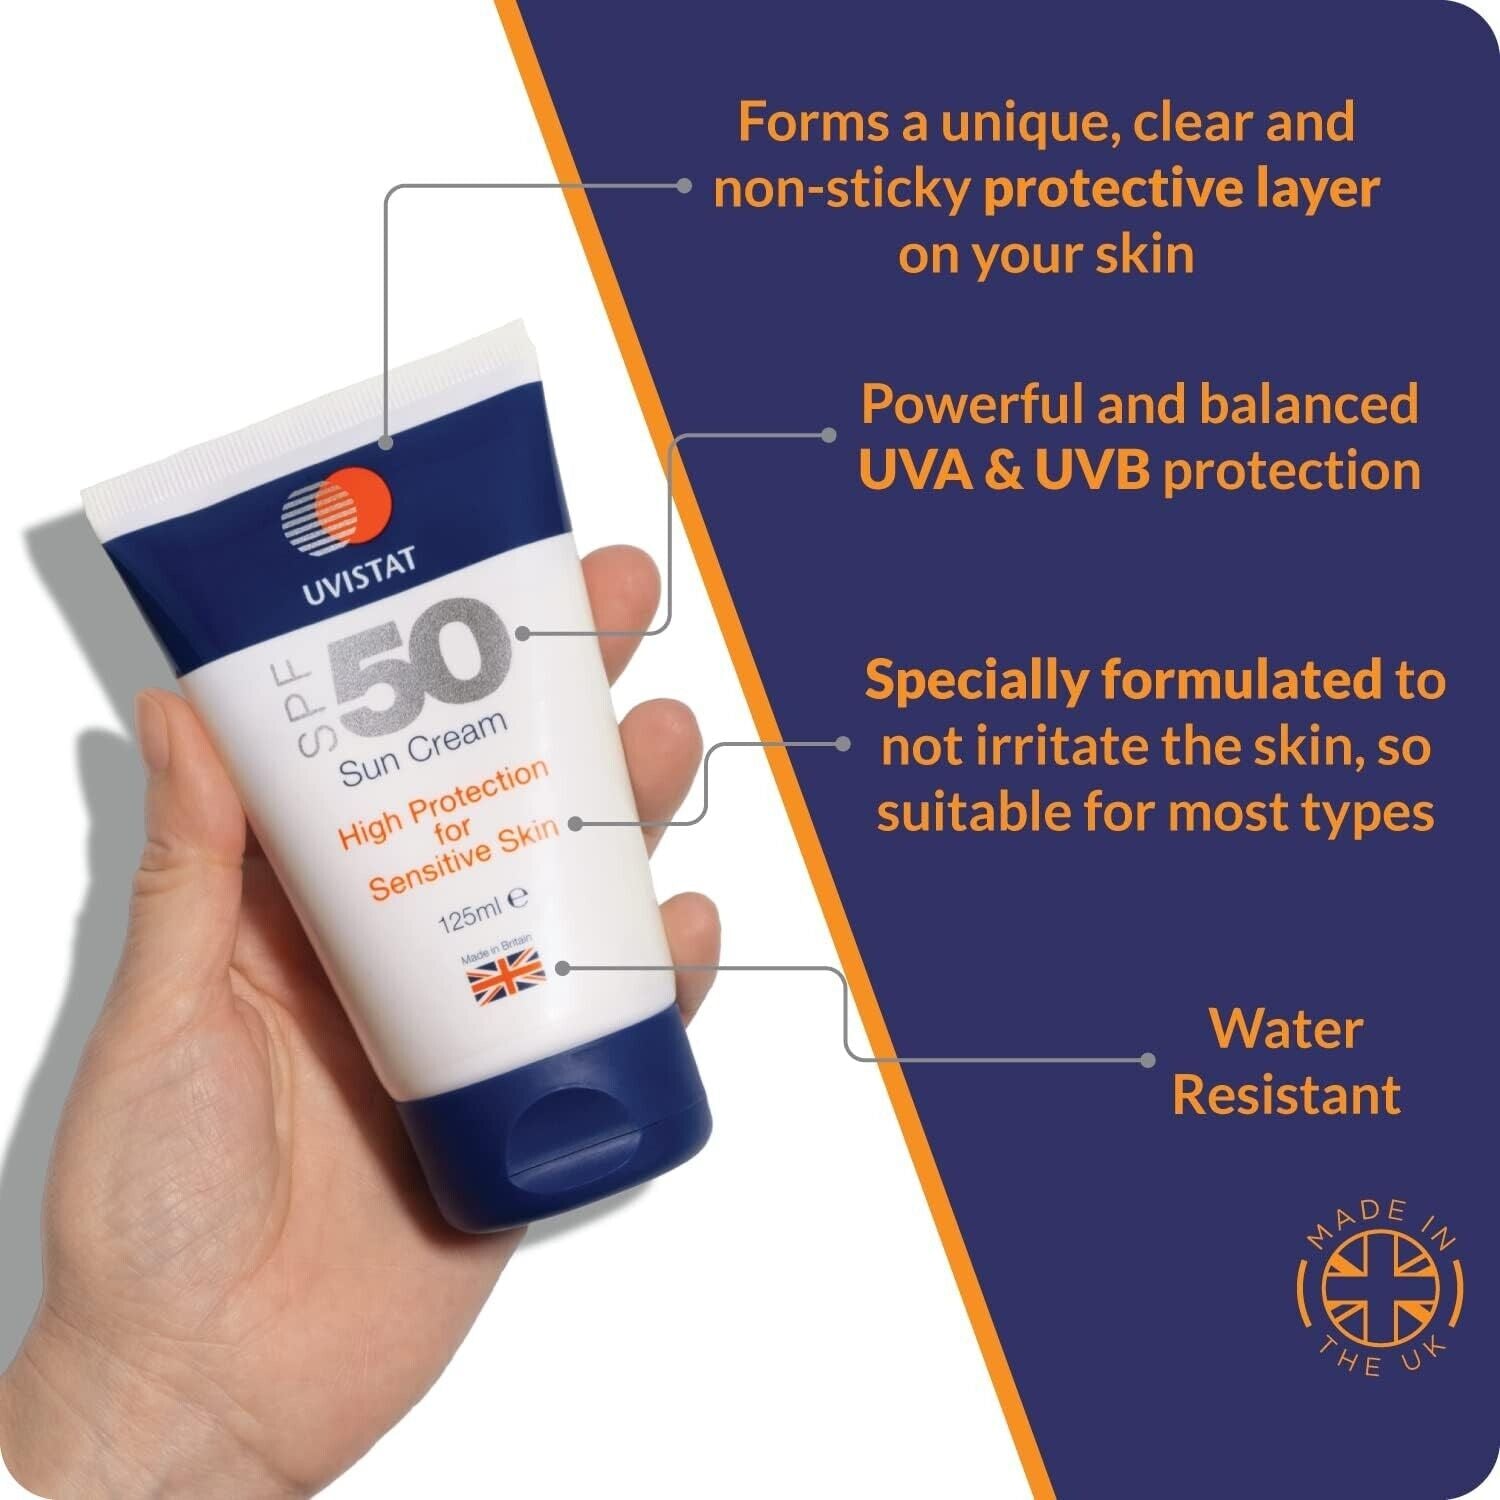 Uvistat Sun Cream SPF50 Moisturising, Water Resistant for Sensitive Skin 125ml